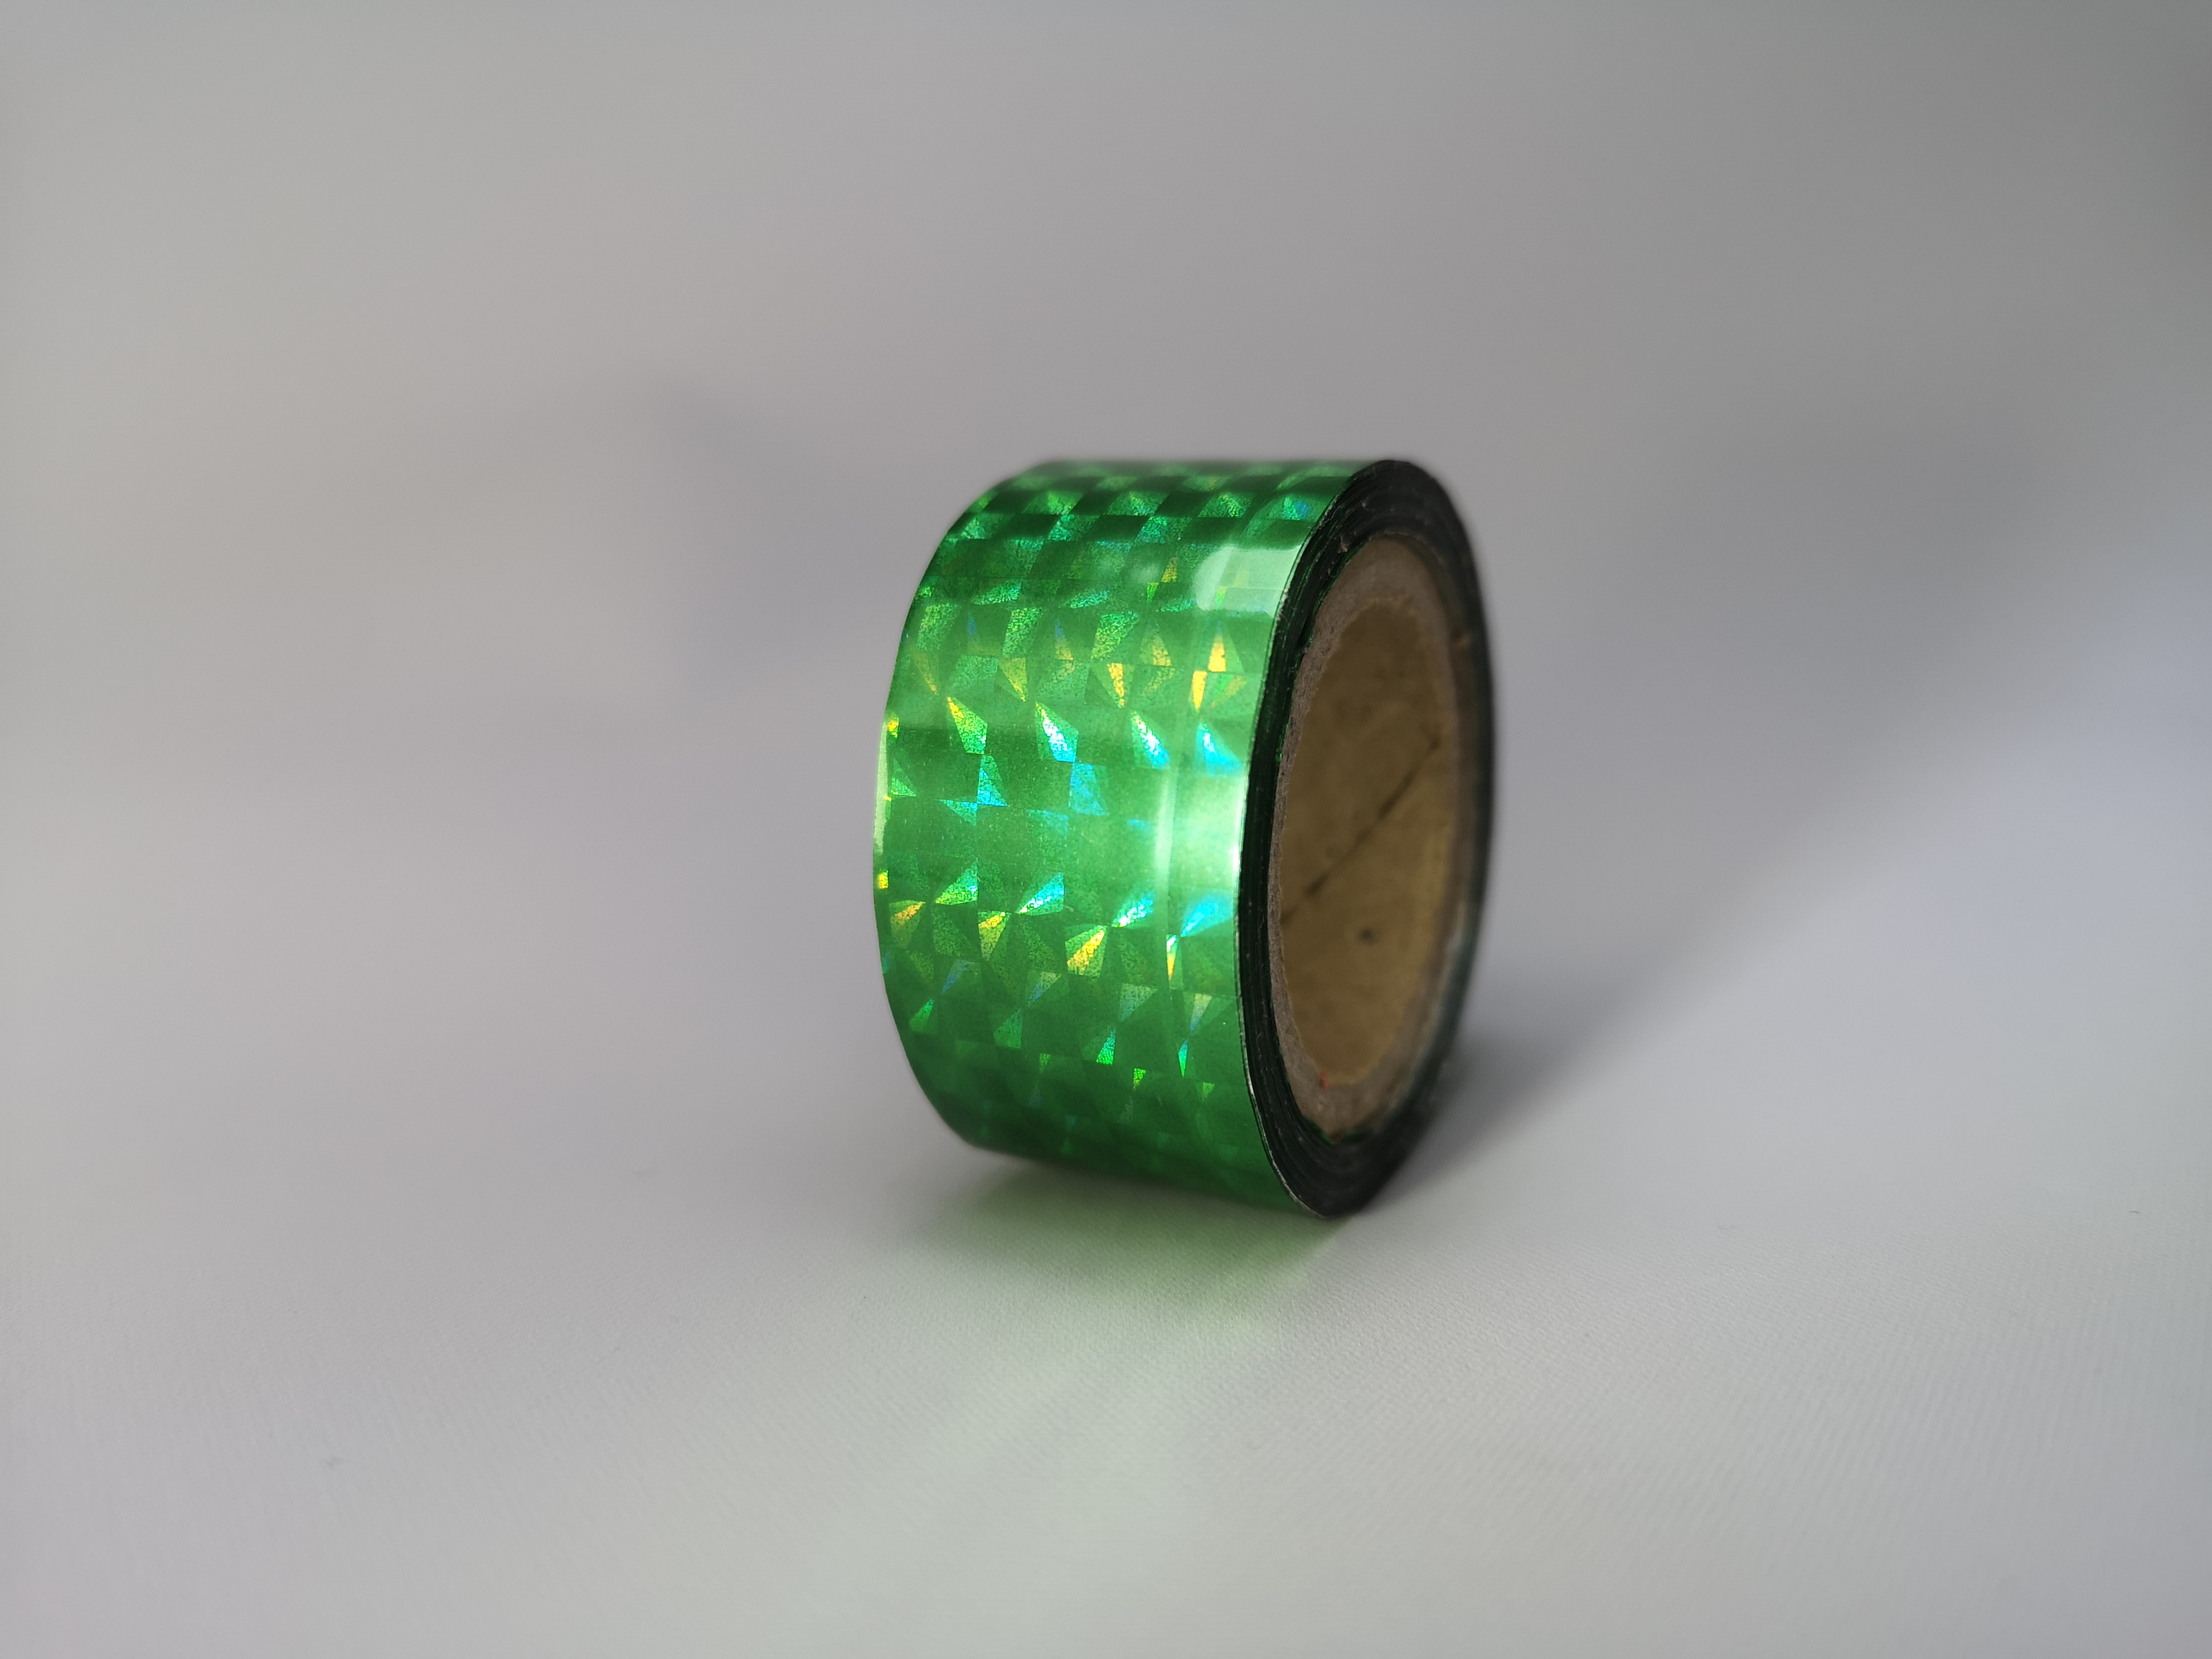 Holografic Prisma Green